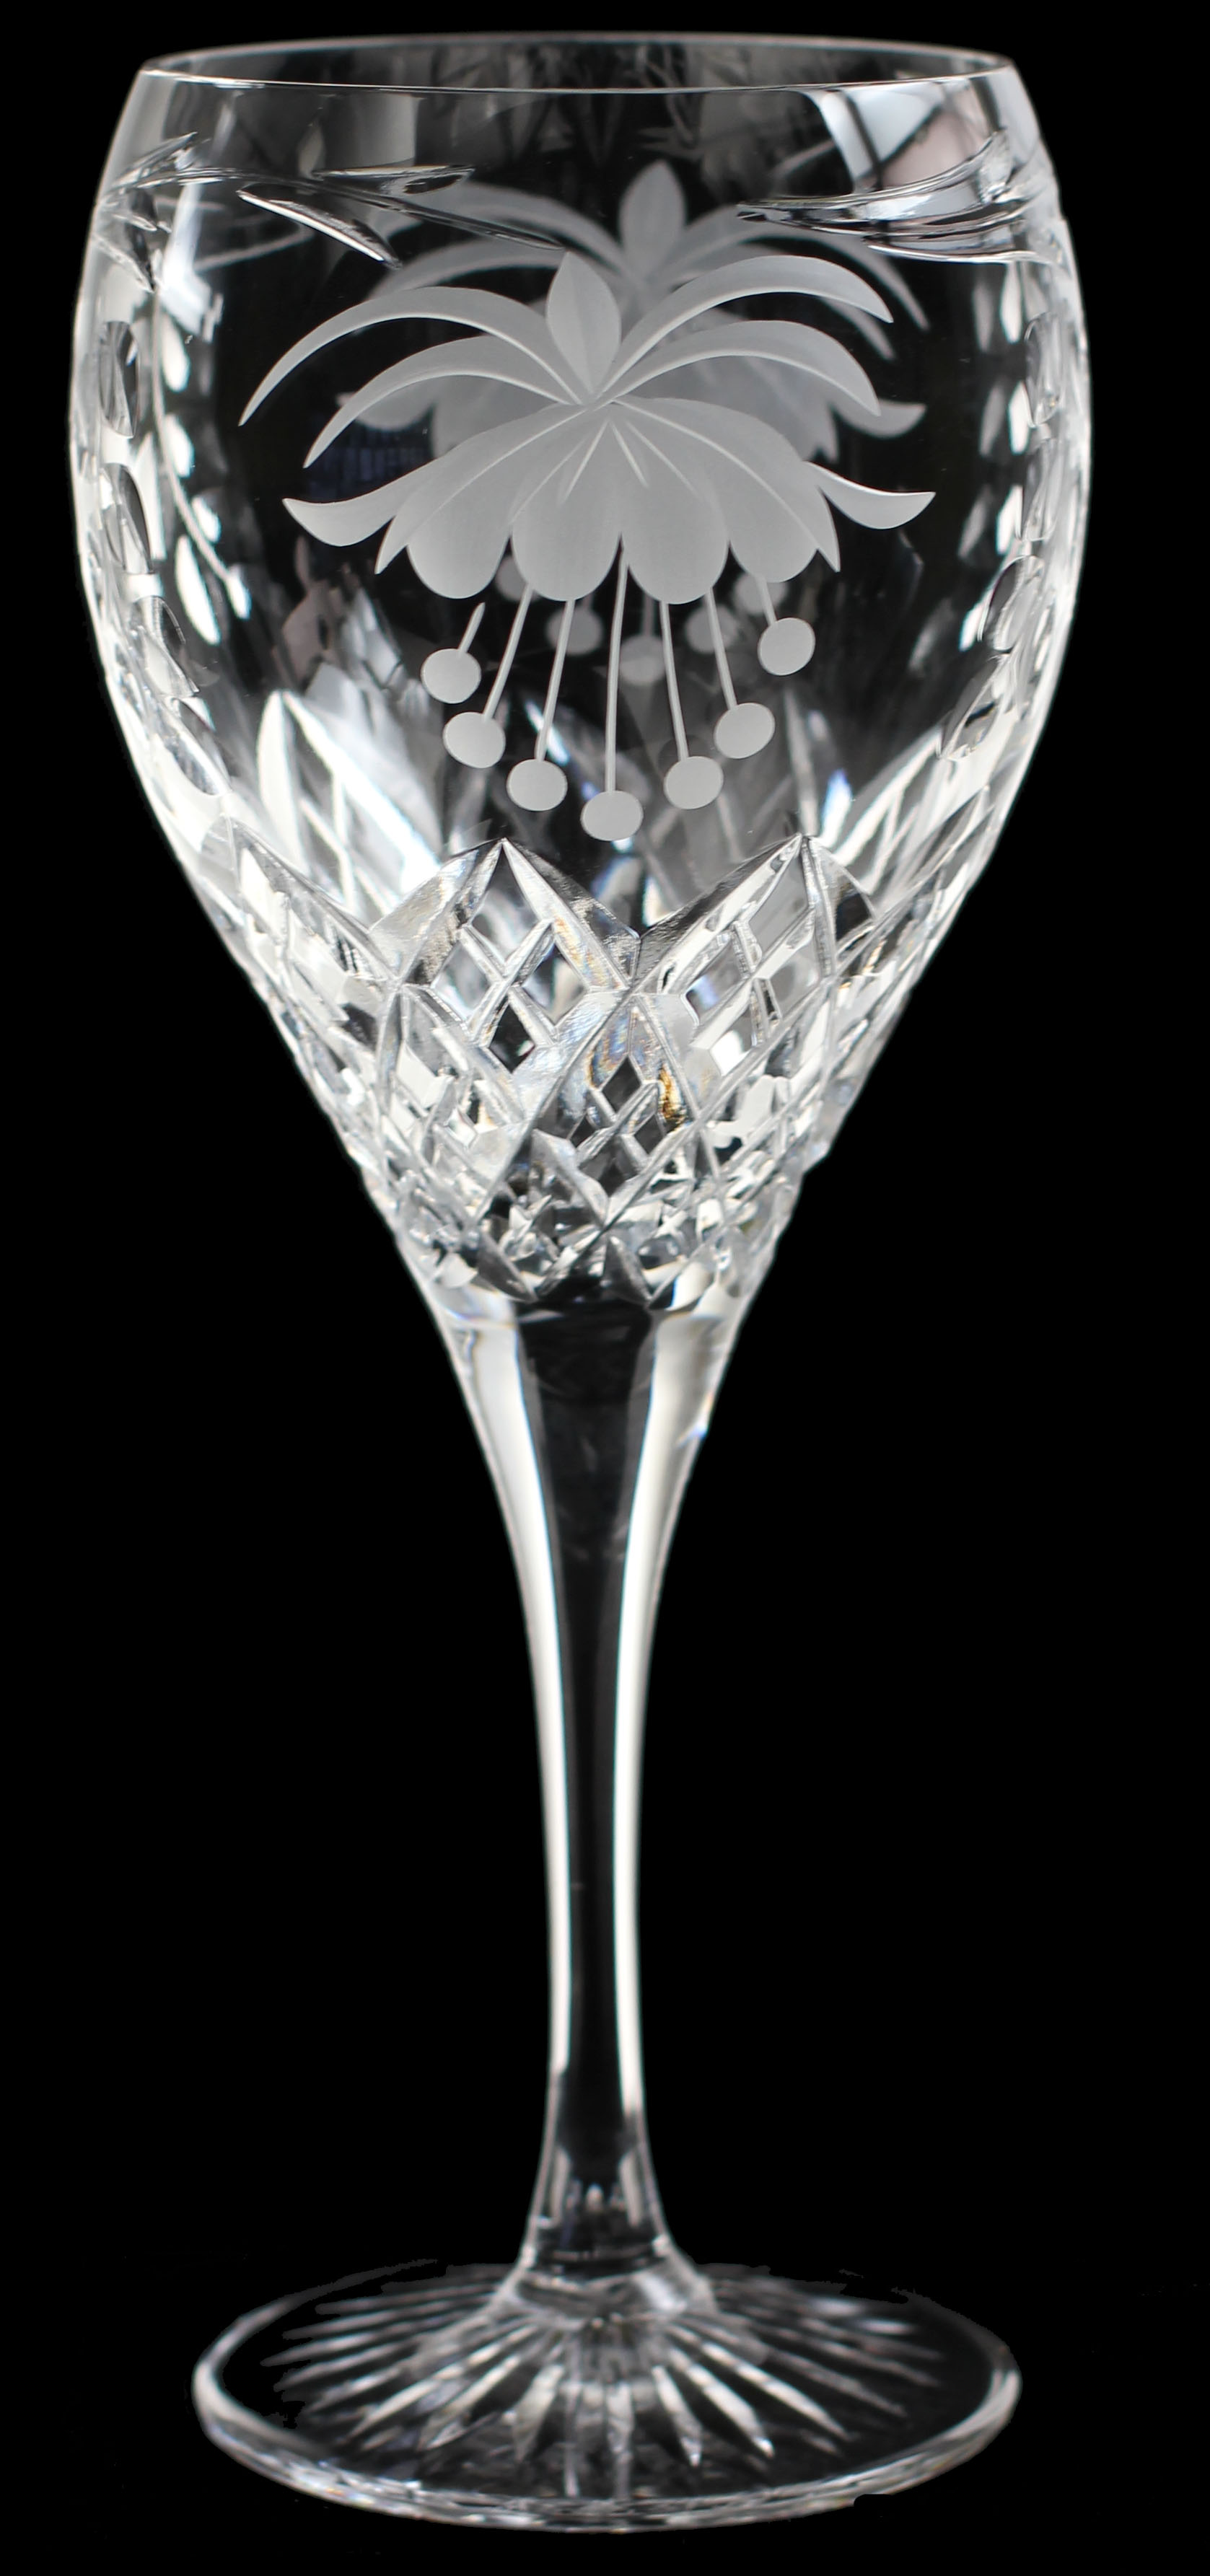 Handmade full lead crystal wine/goblet in our Fuchsia design